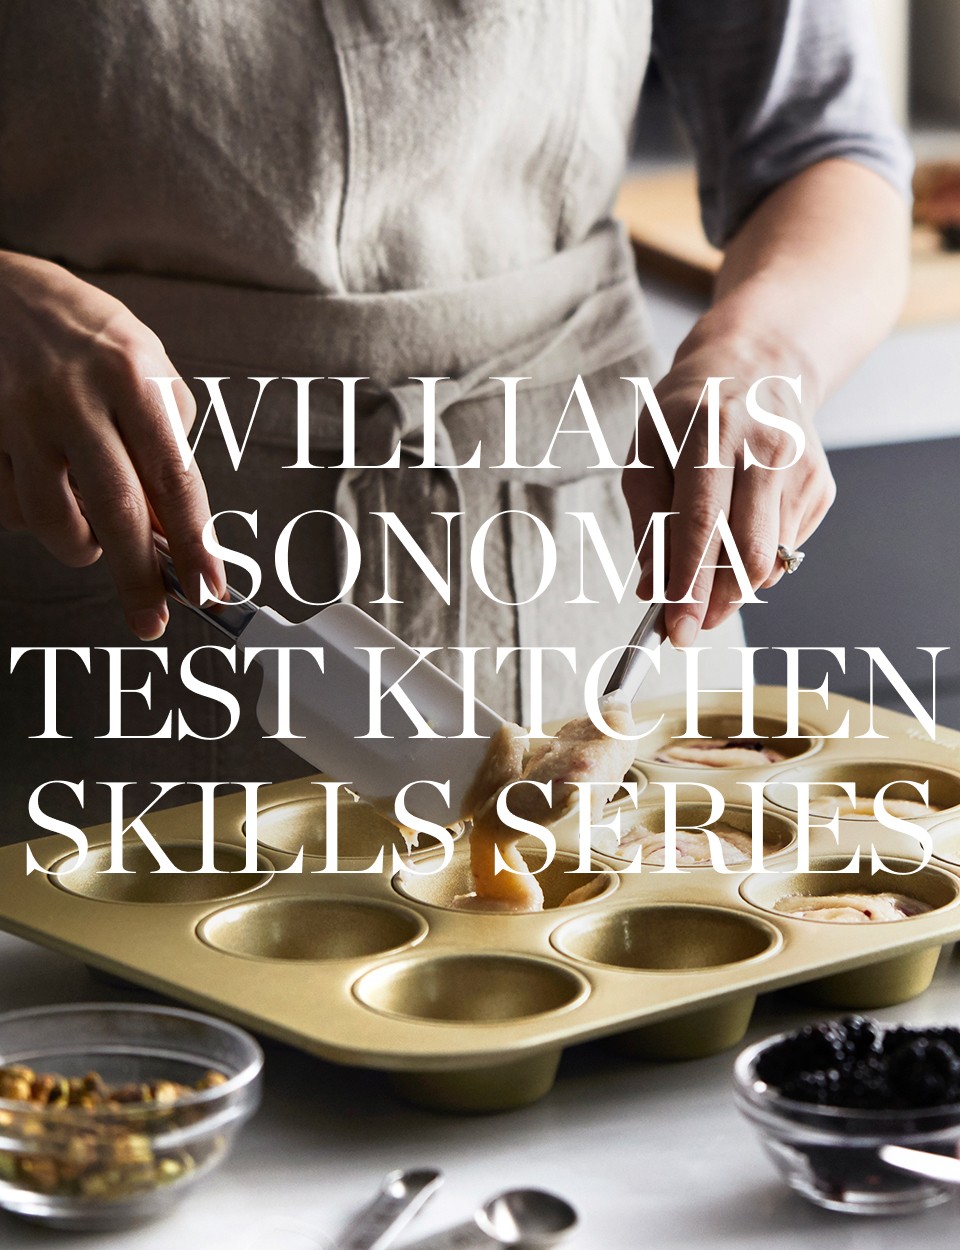 Williams Sonoma Skills Series